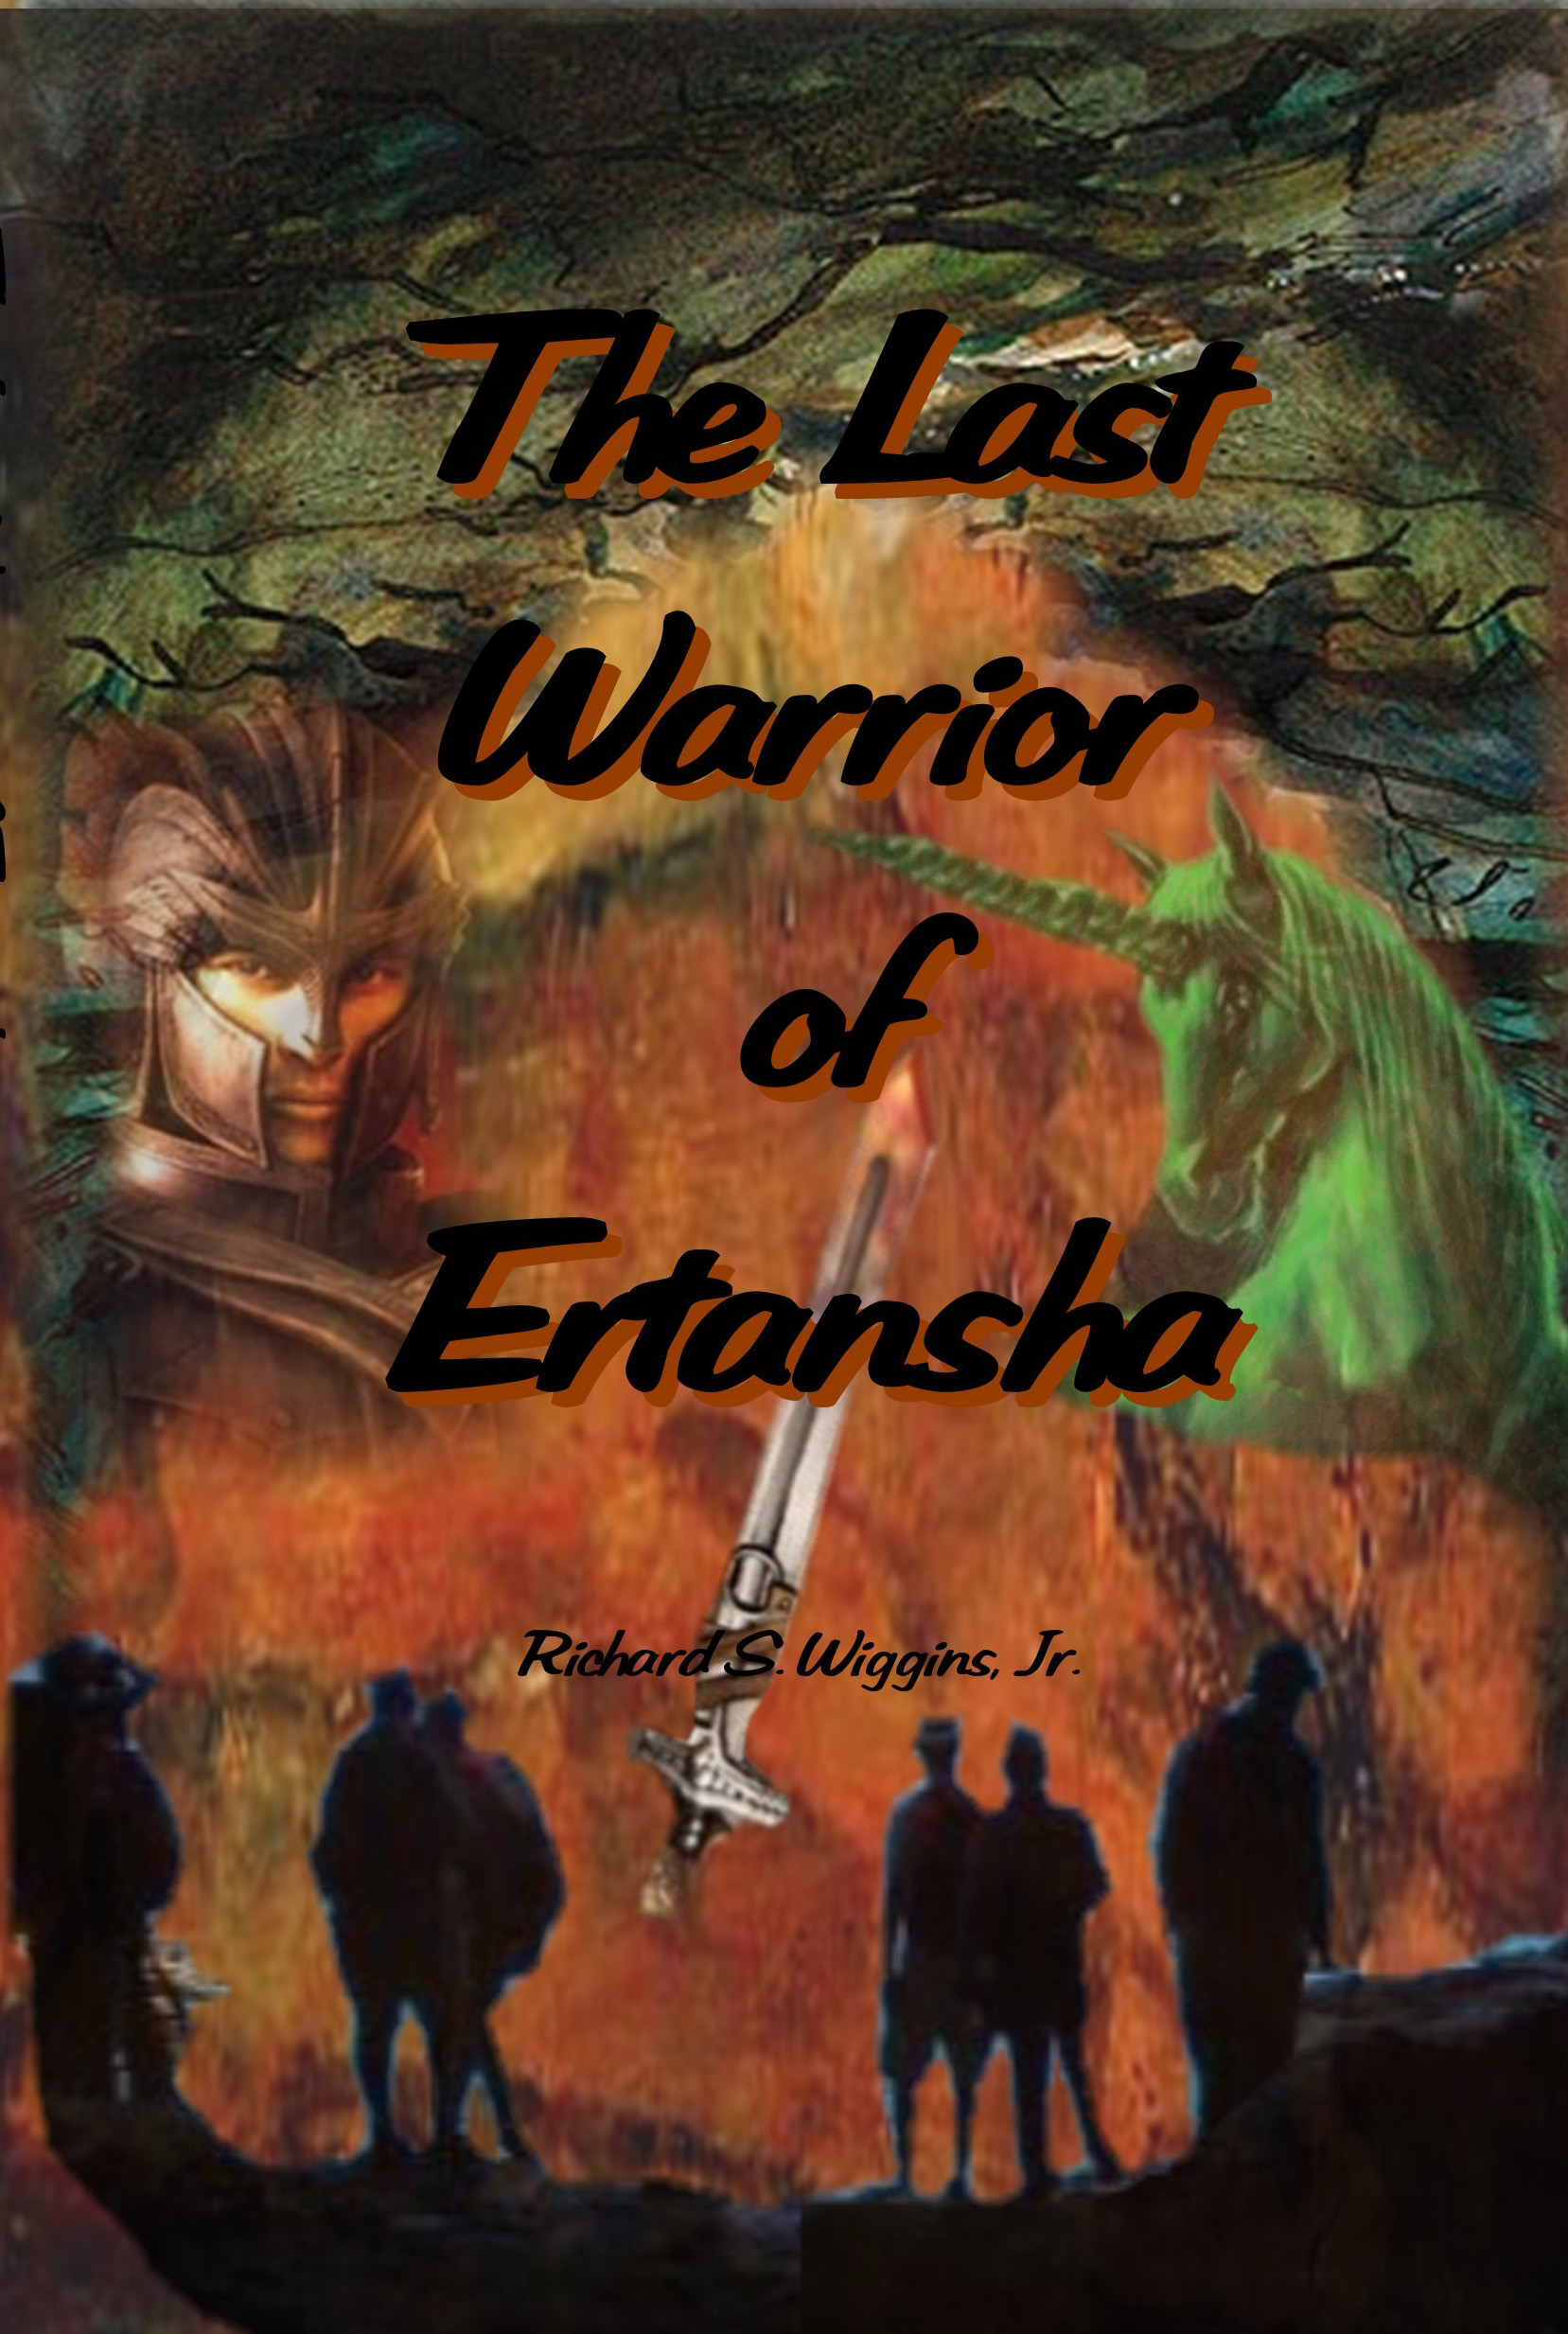 The Last Warrior of Ertansha